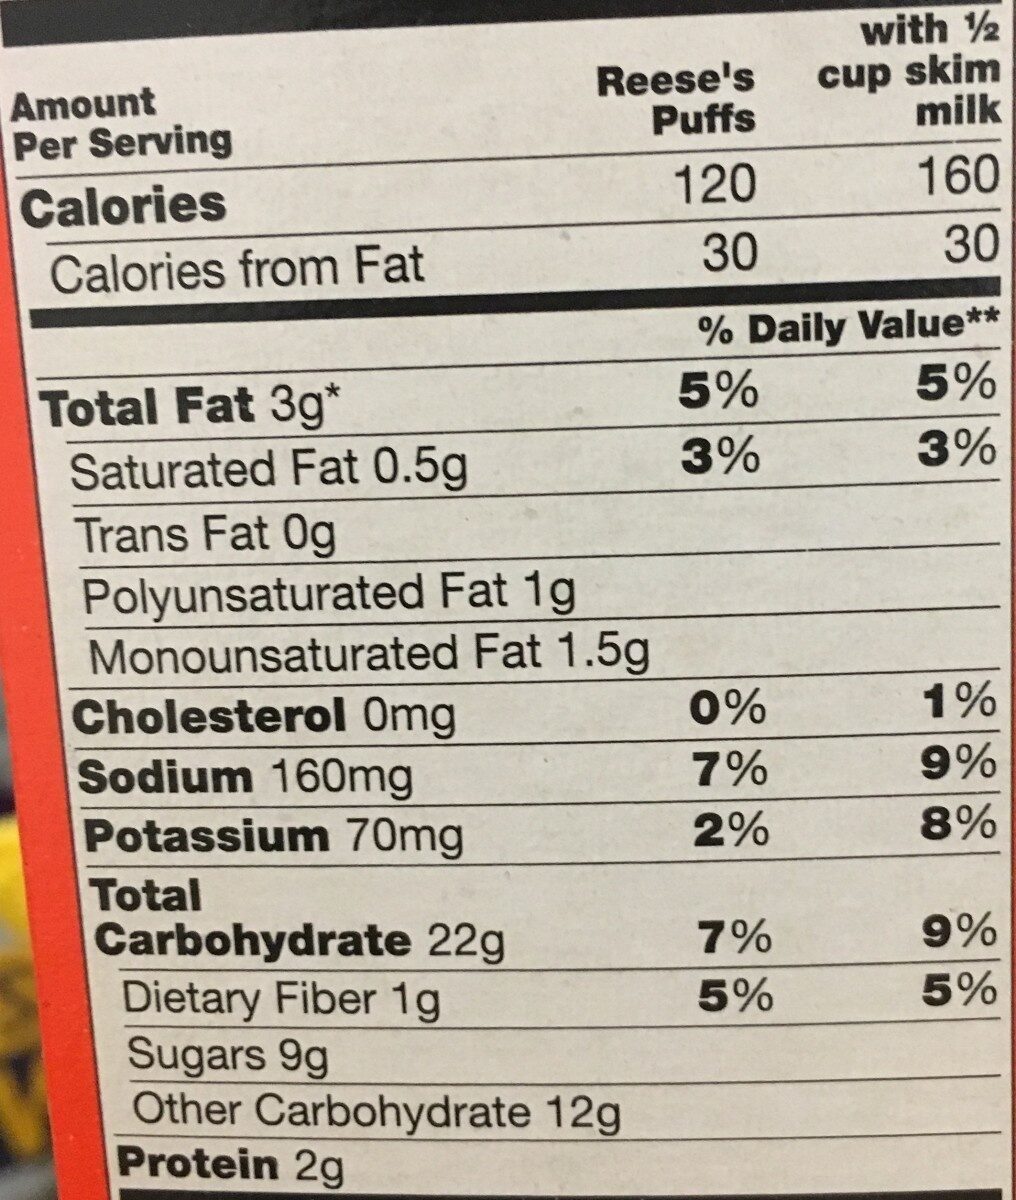 Puffs sweet & crunchy corn puffs - Nutrition facts